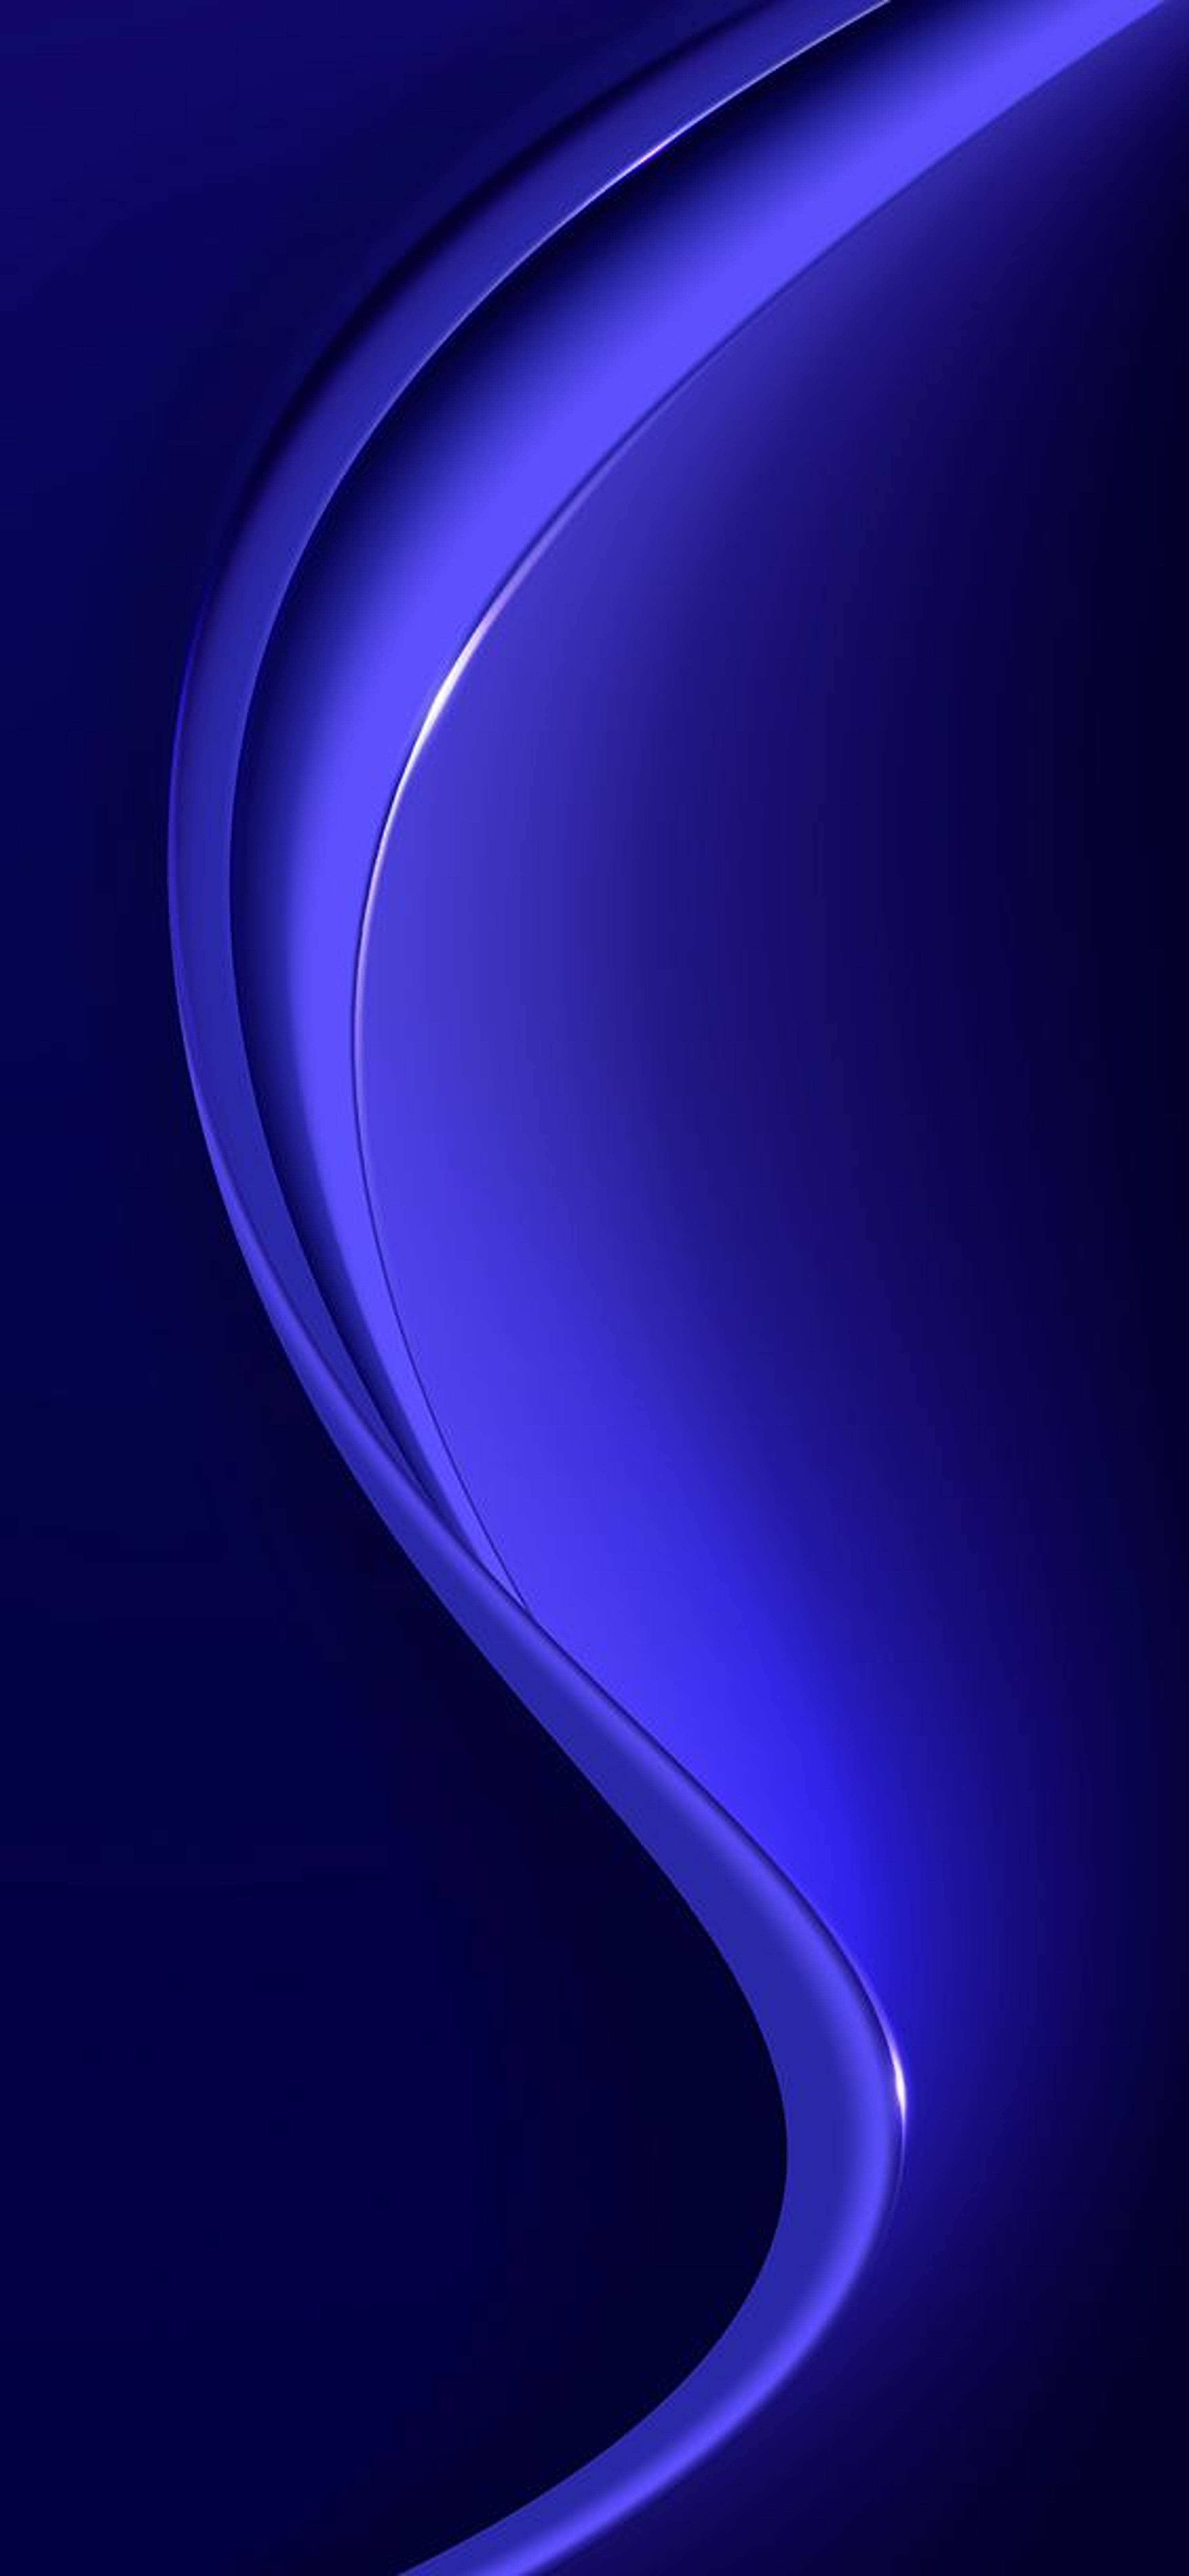 Vibrant Blue Light Wave On Redmi Note 9 Pro Wallpaper